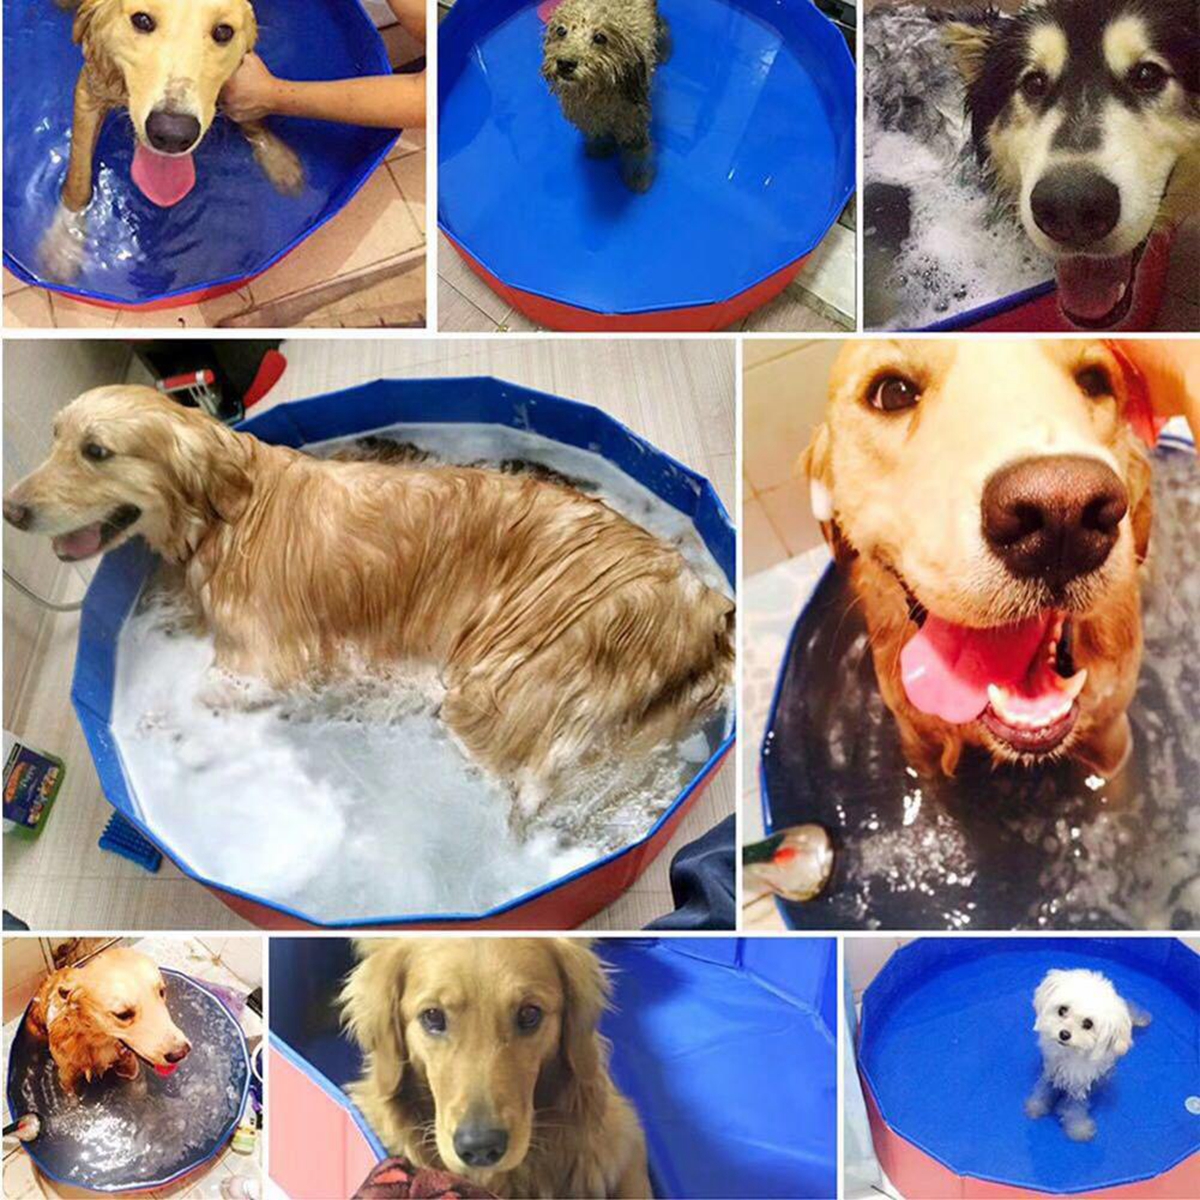 60100cm-Folding-Dog-Bath-Pool-Pet-Swimming-Bath-Tub-Kiddie-Pool-for-Dogs-Cats-Kids-1881131-9